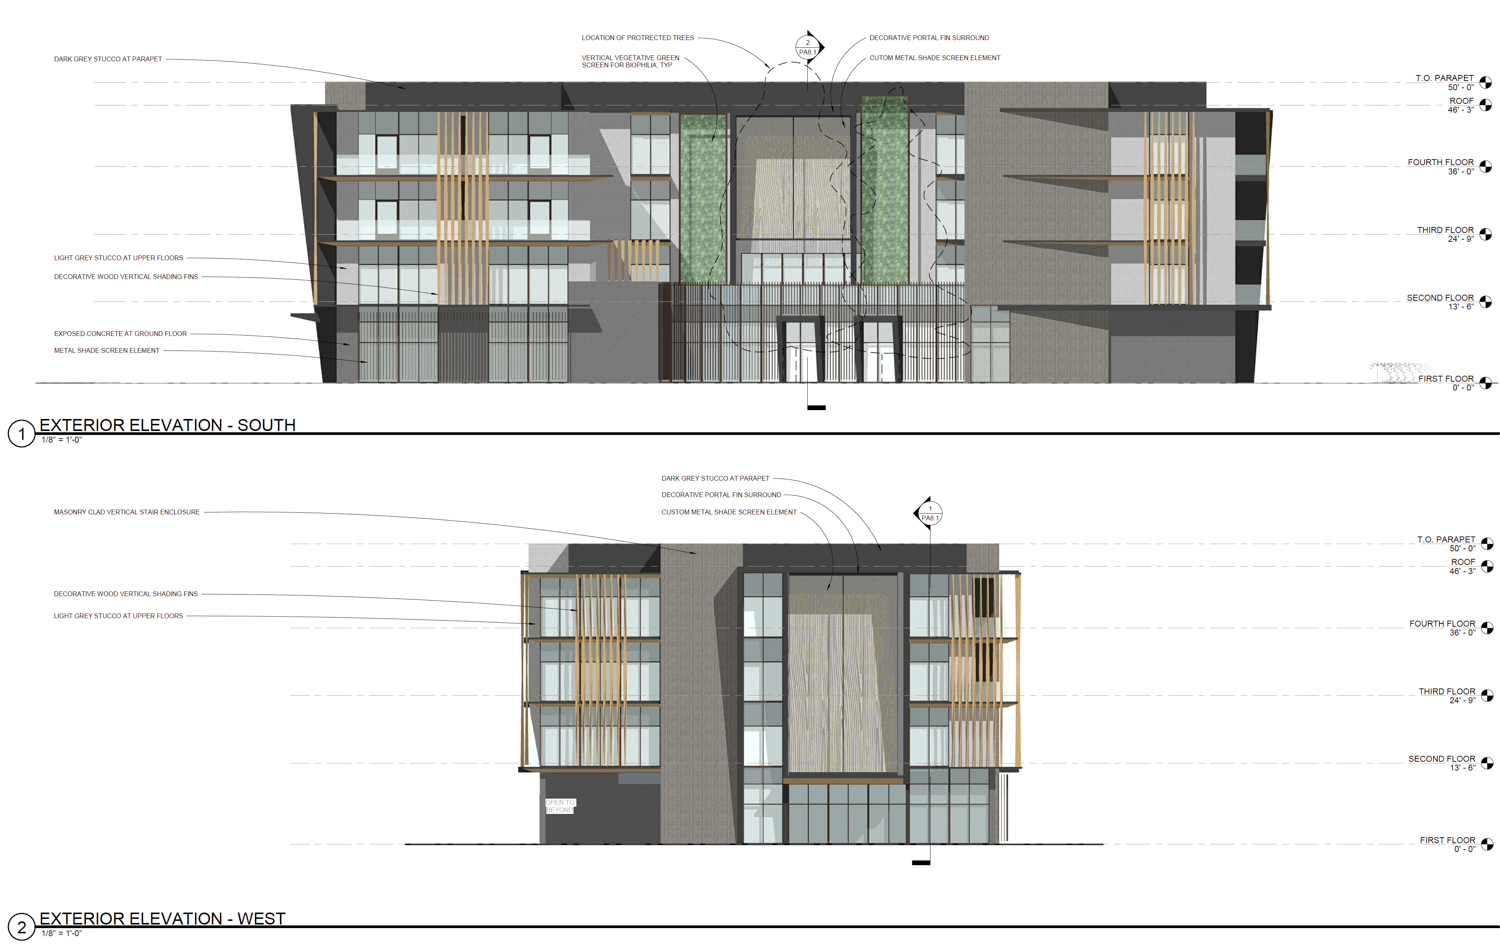 824 San Antonio Road facade elevation, illustration by Architects FORA